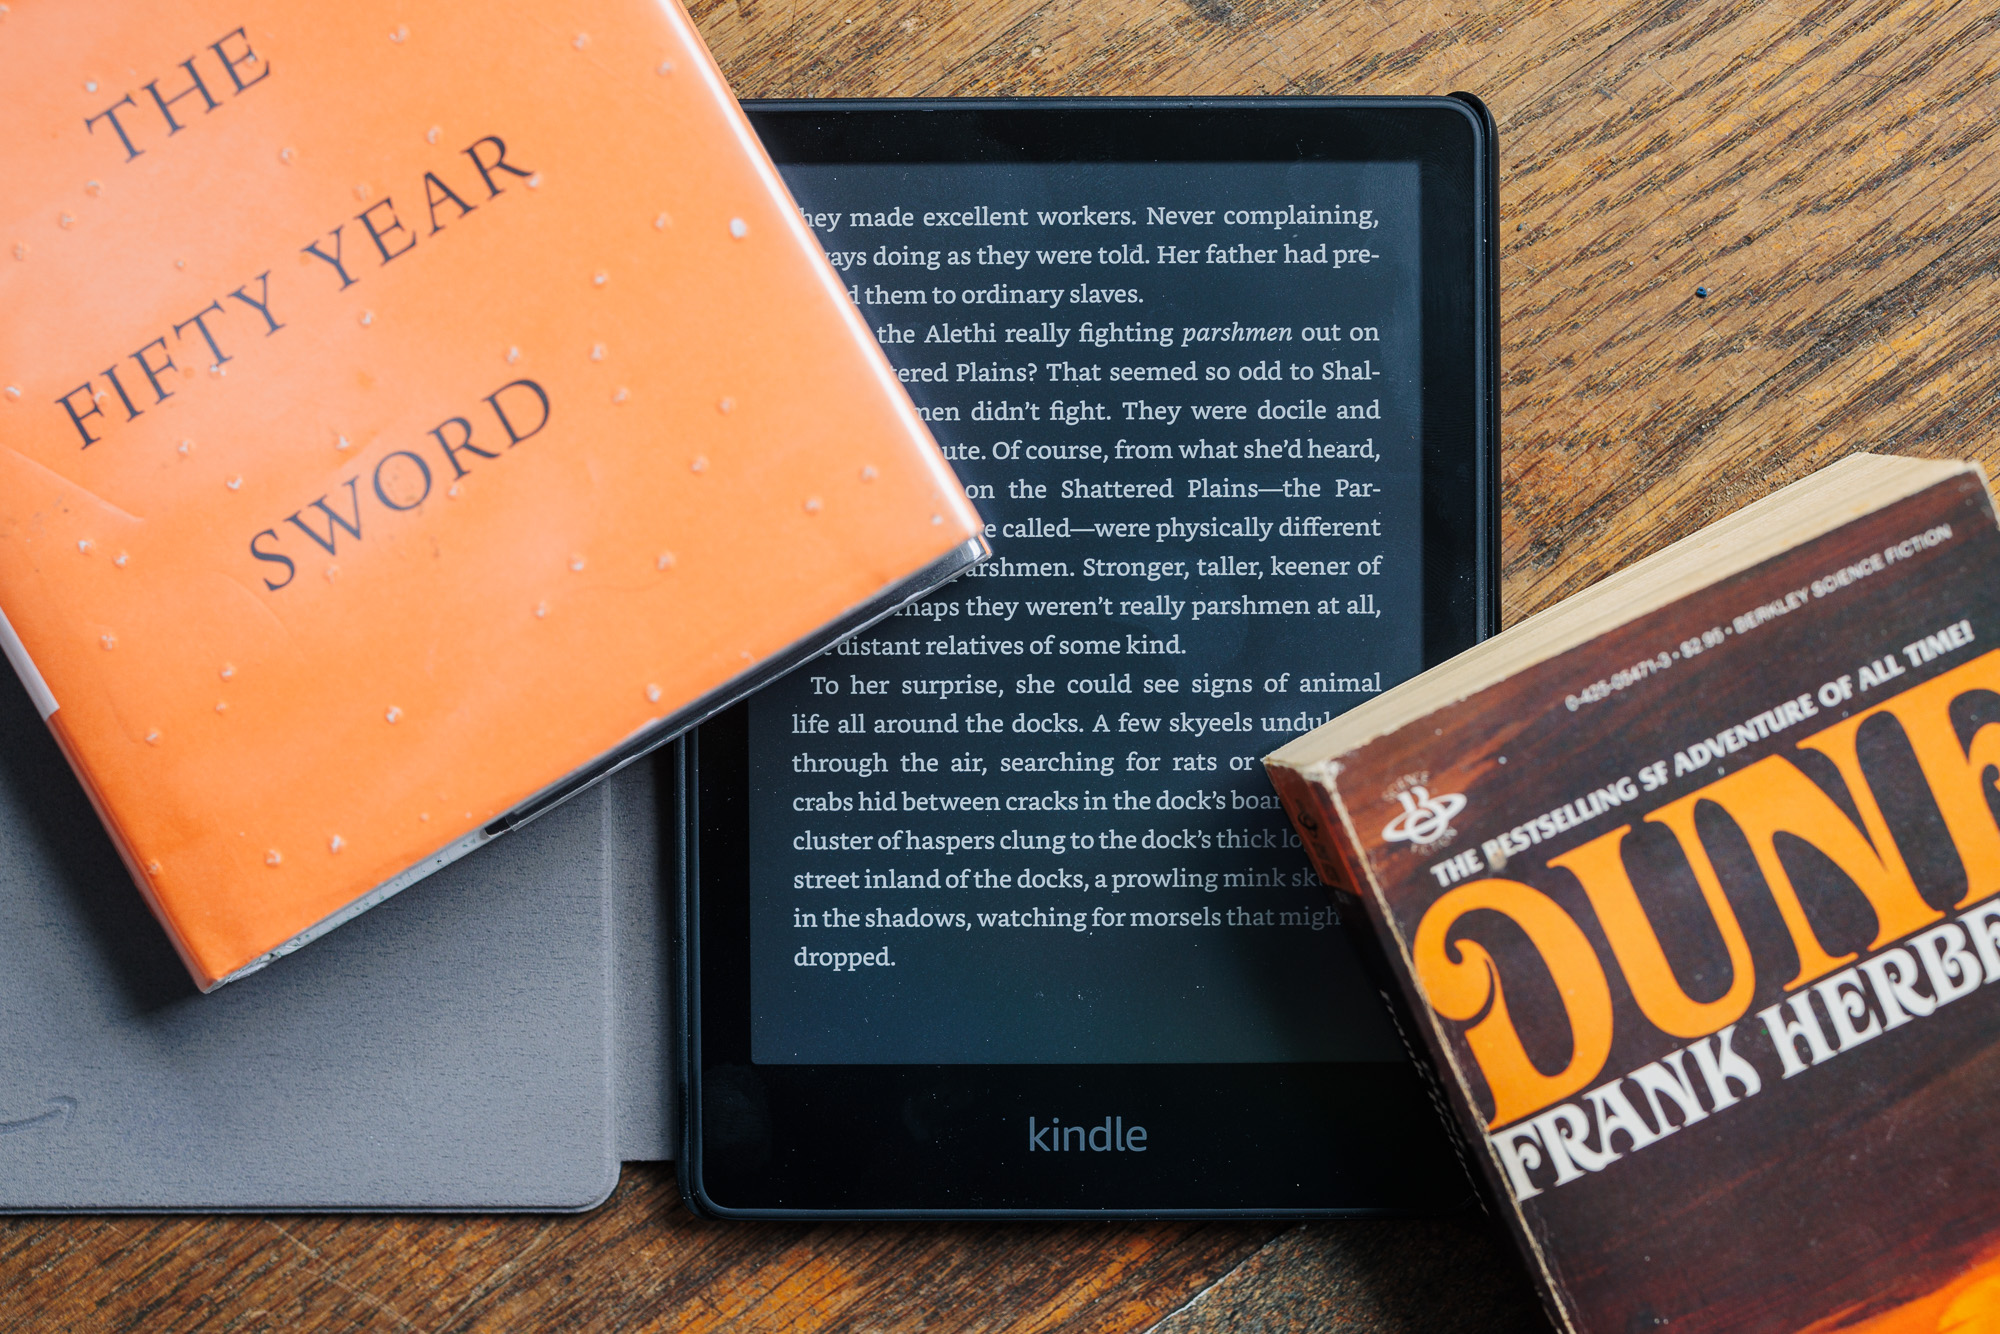 Amazon Prime Day brings predictably massive deals on Kindle e-readers